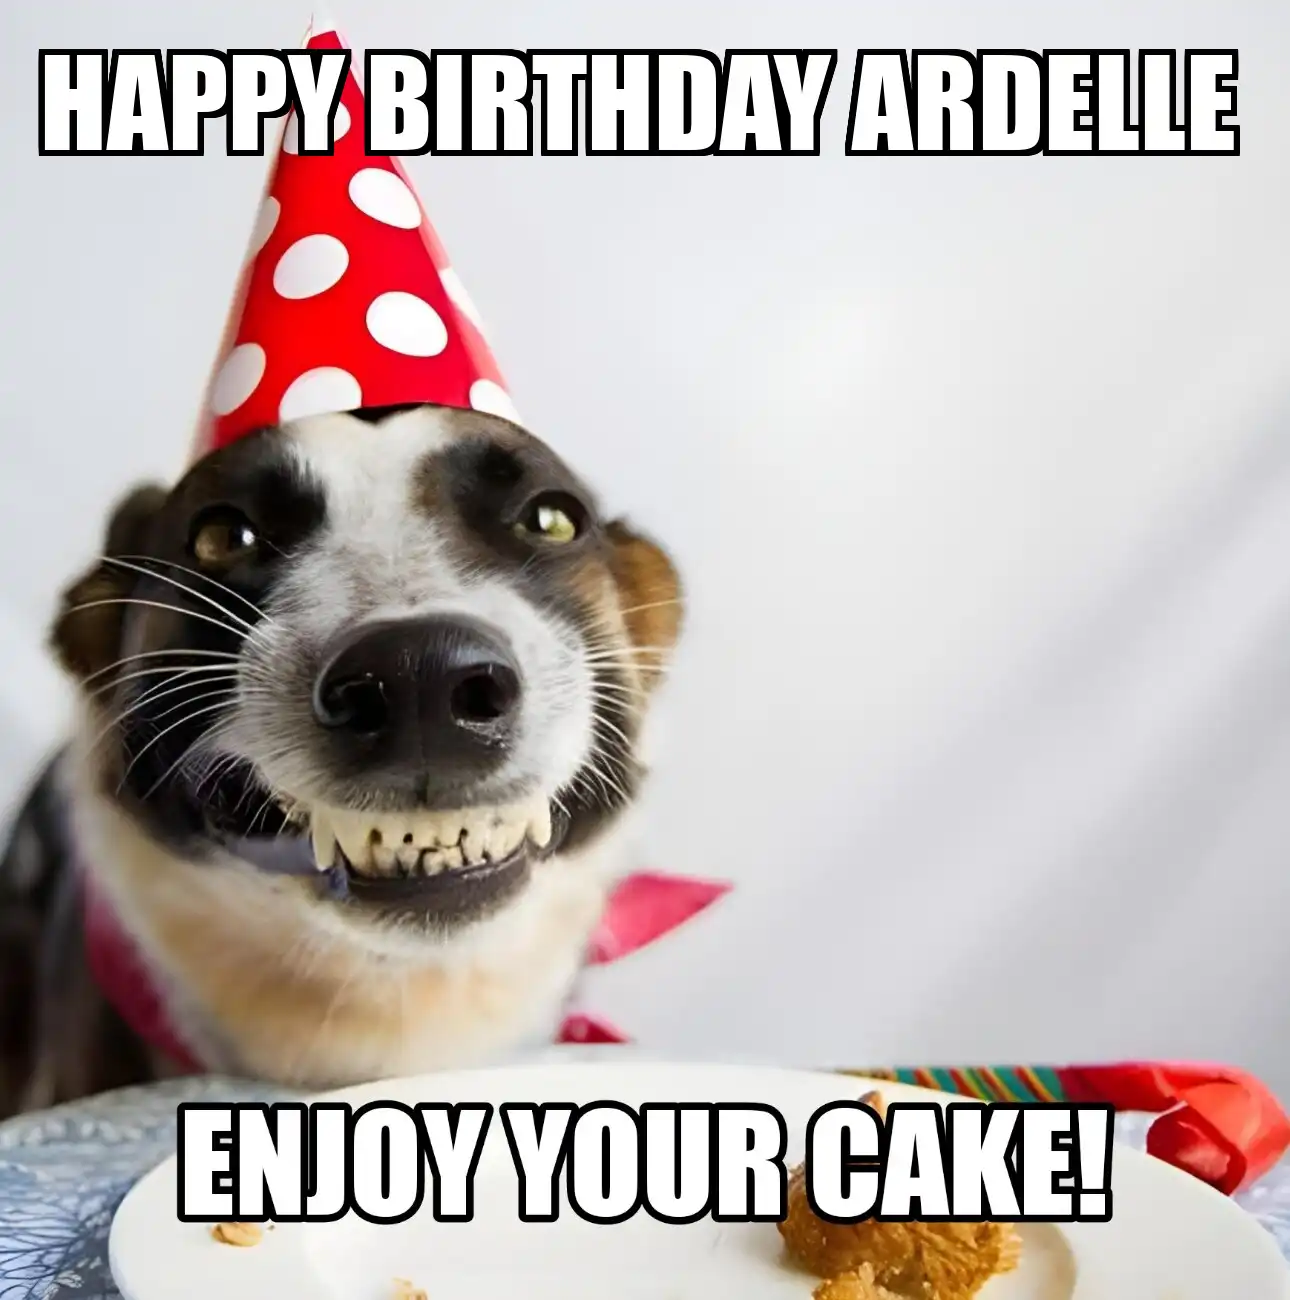 Happy Birthday Ardelle Enjoy Your Cake Dog Meme